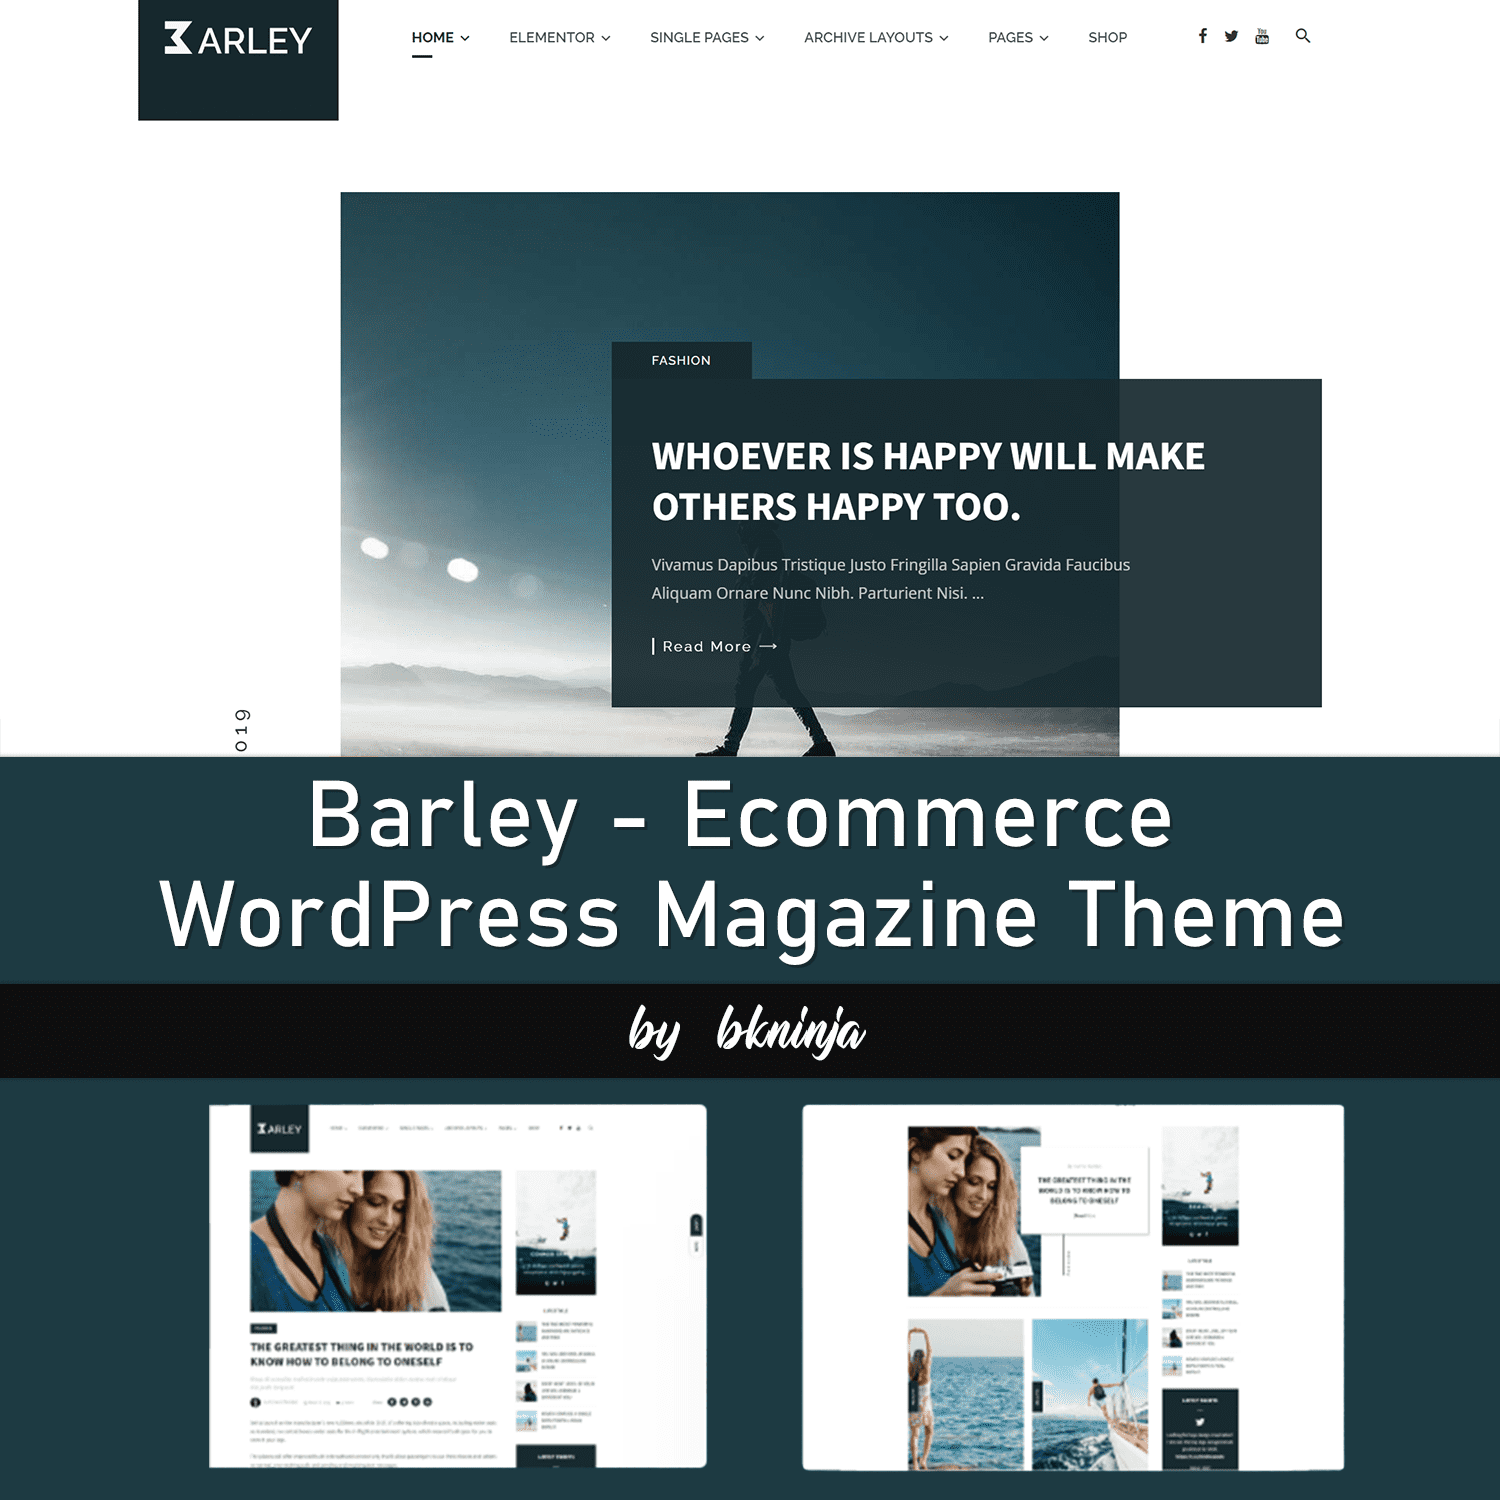 Barley ecommerce wordpress magazine theme, main picture 1500x1500.